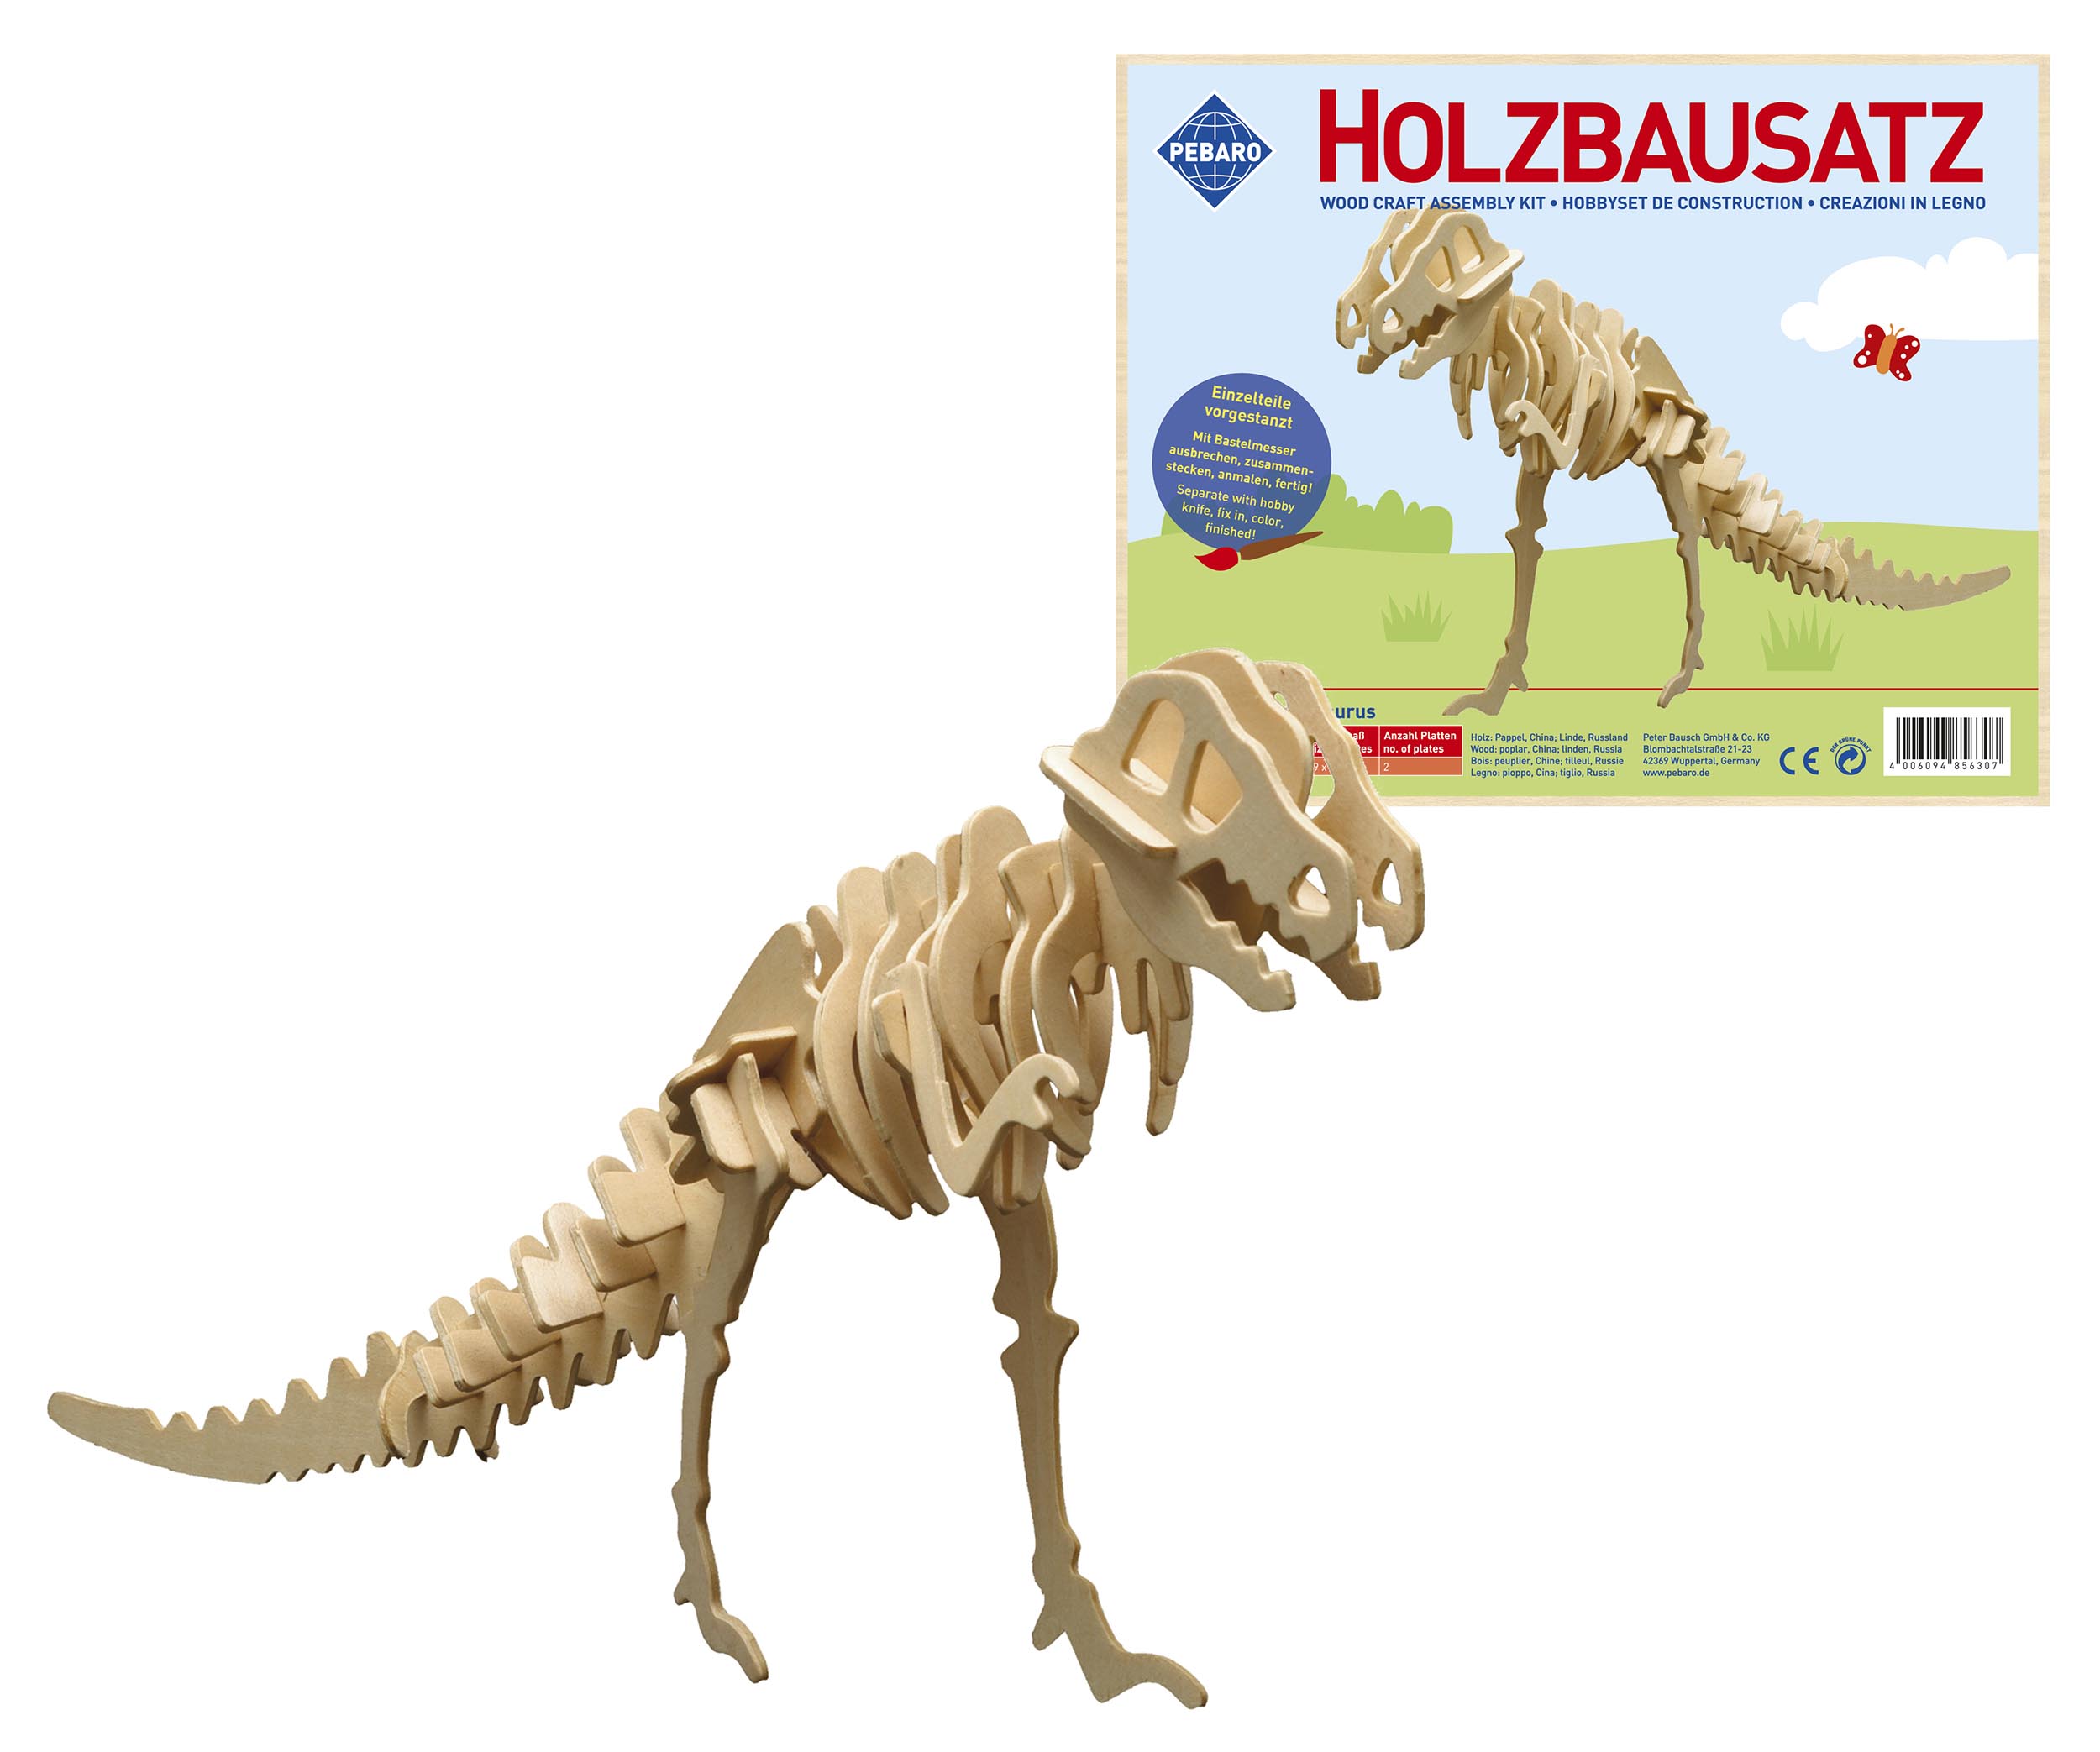 Pebaro Holzbausatz Tyrannosaurus.